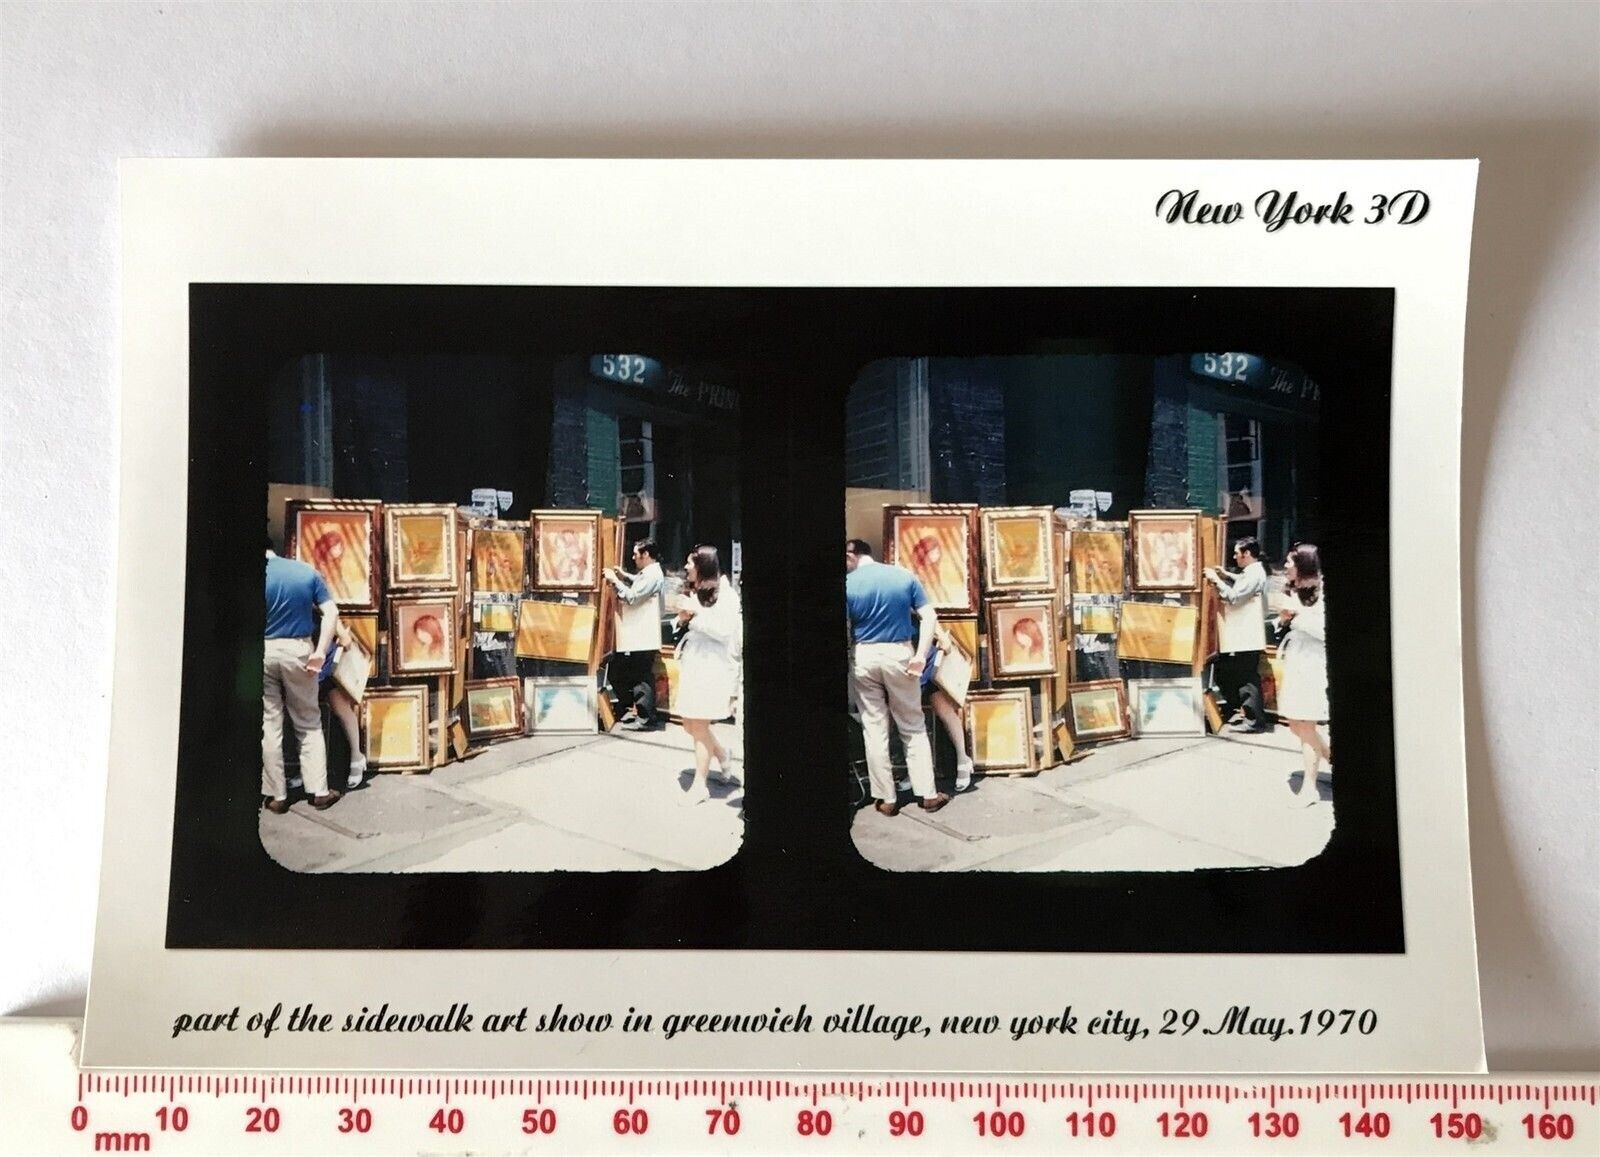 SIDEWALK ART SHOW GREENWICH VILLAGE Photo Paper Colour Stereoview 70's New York